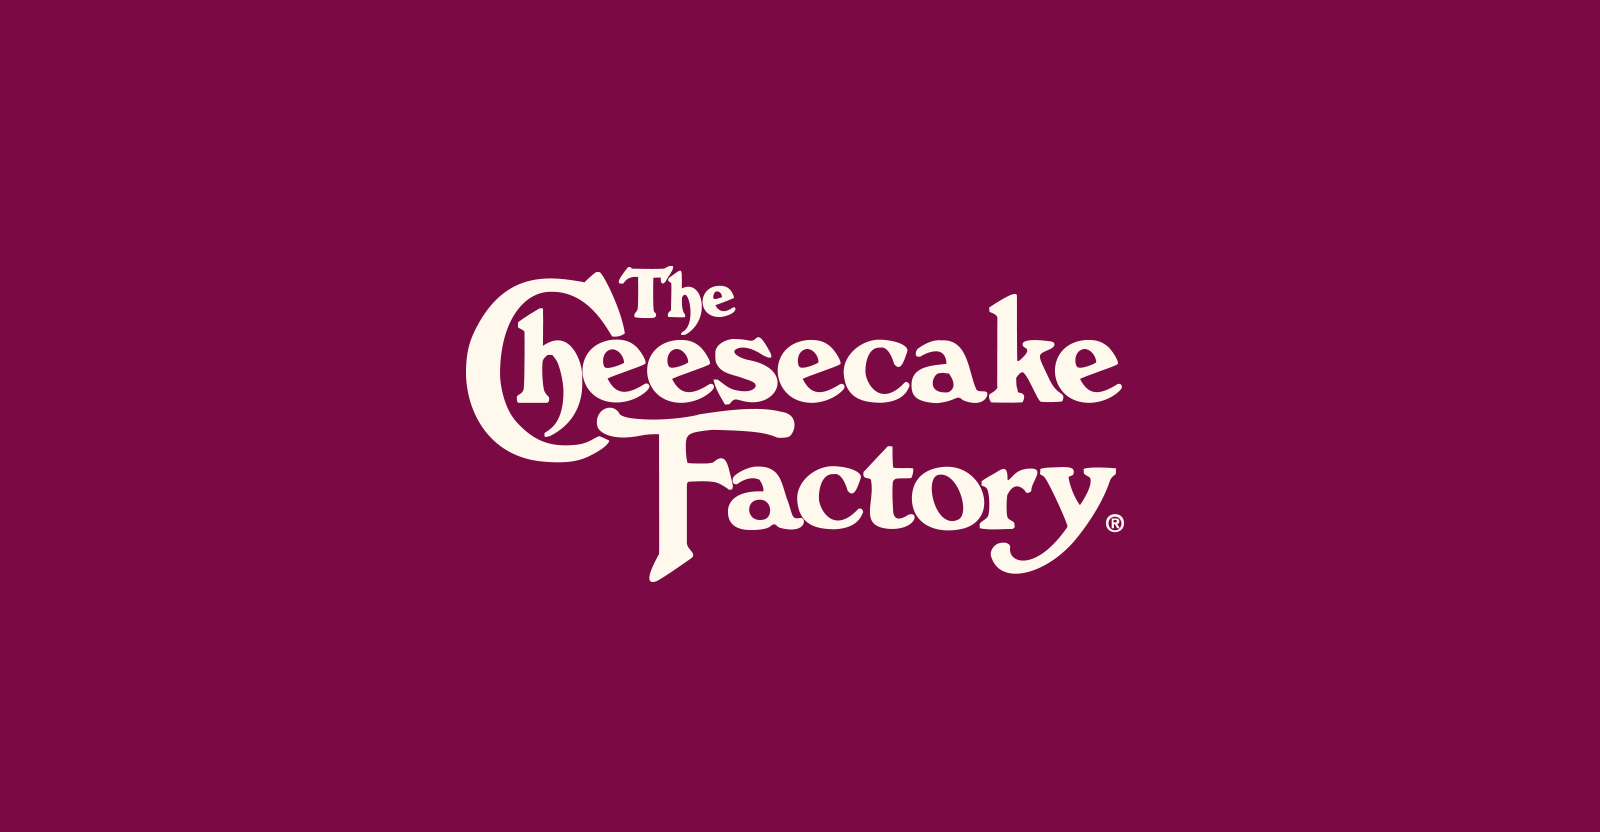 cheesecake factory gluten-free menu